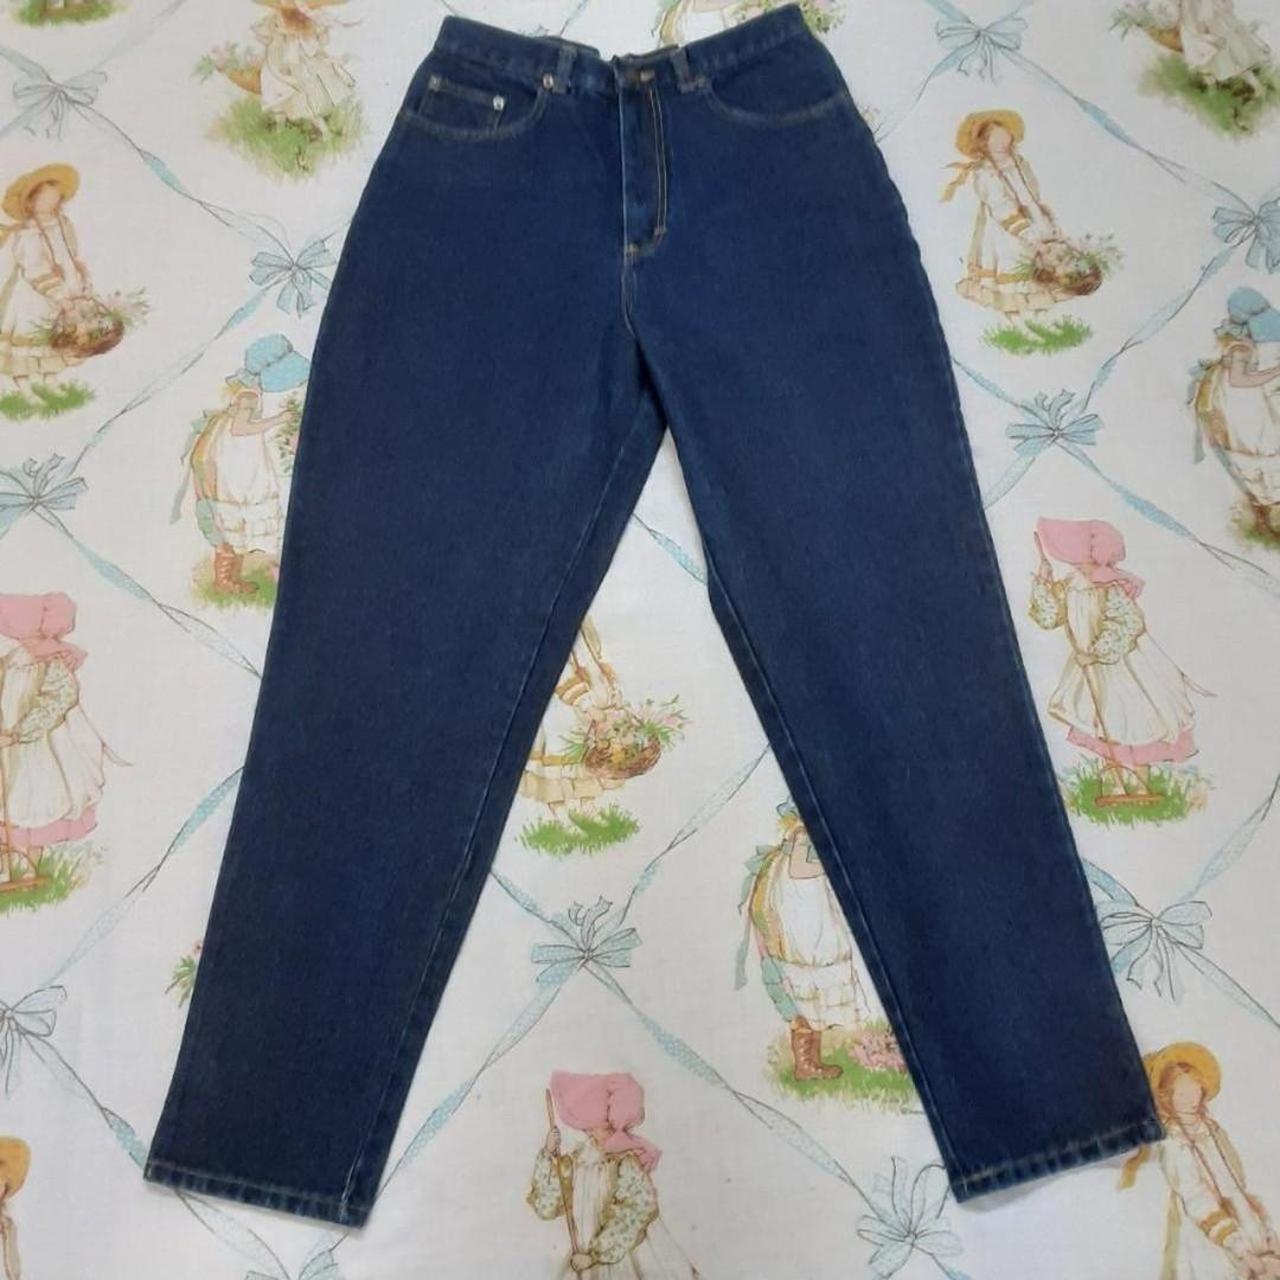 Product Image 3 - Vintage high-waisted Ab'Slicks jeans
Dark blue